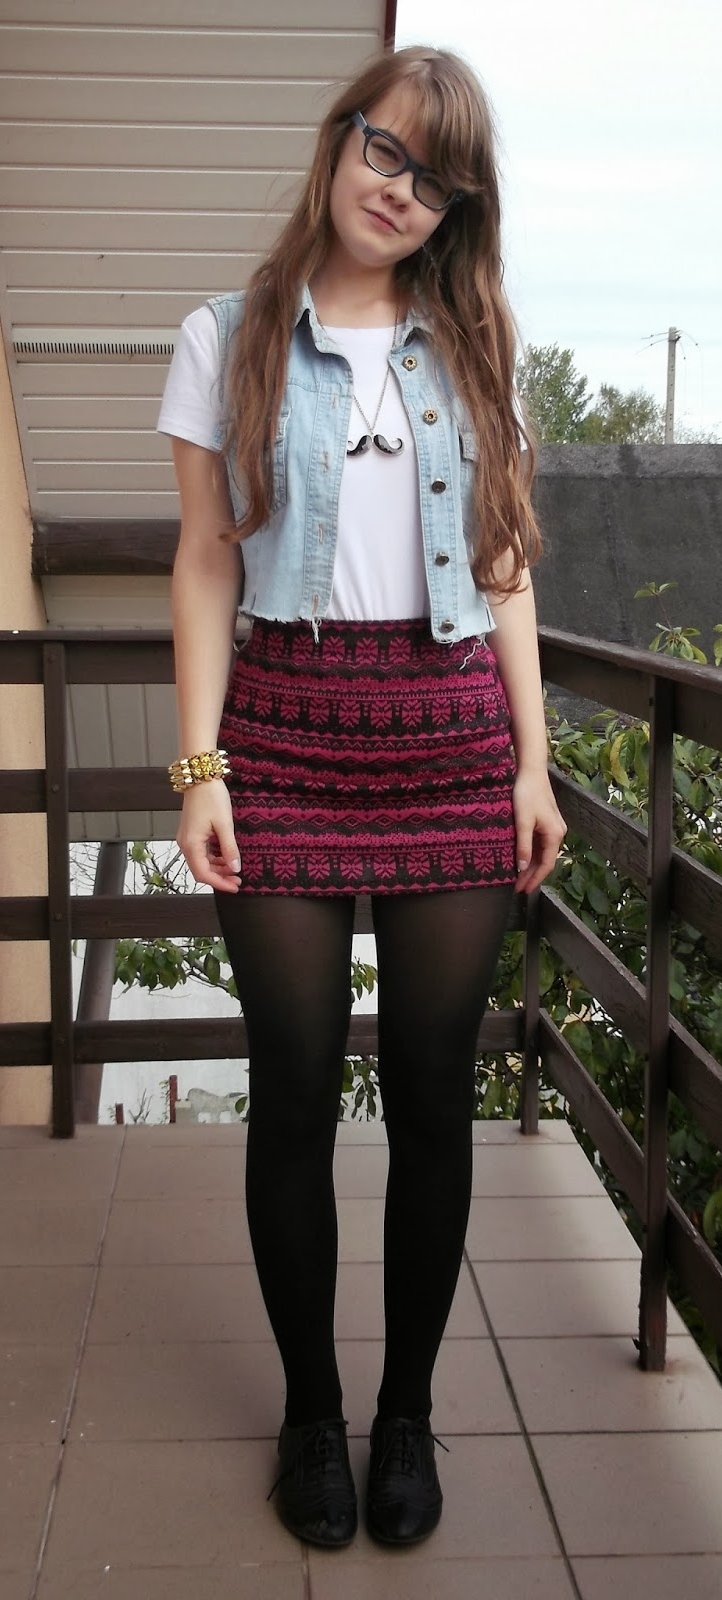 Auburn Teen Girl wearing Black Opaque Pantyhose and Black and Pink Miniskirt